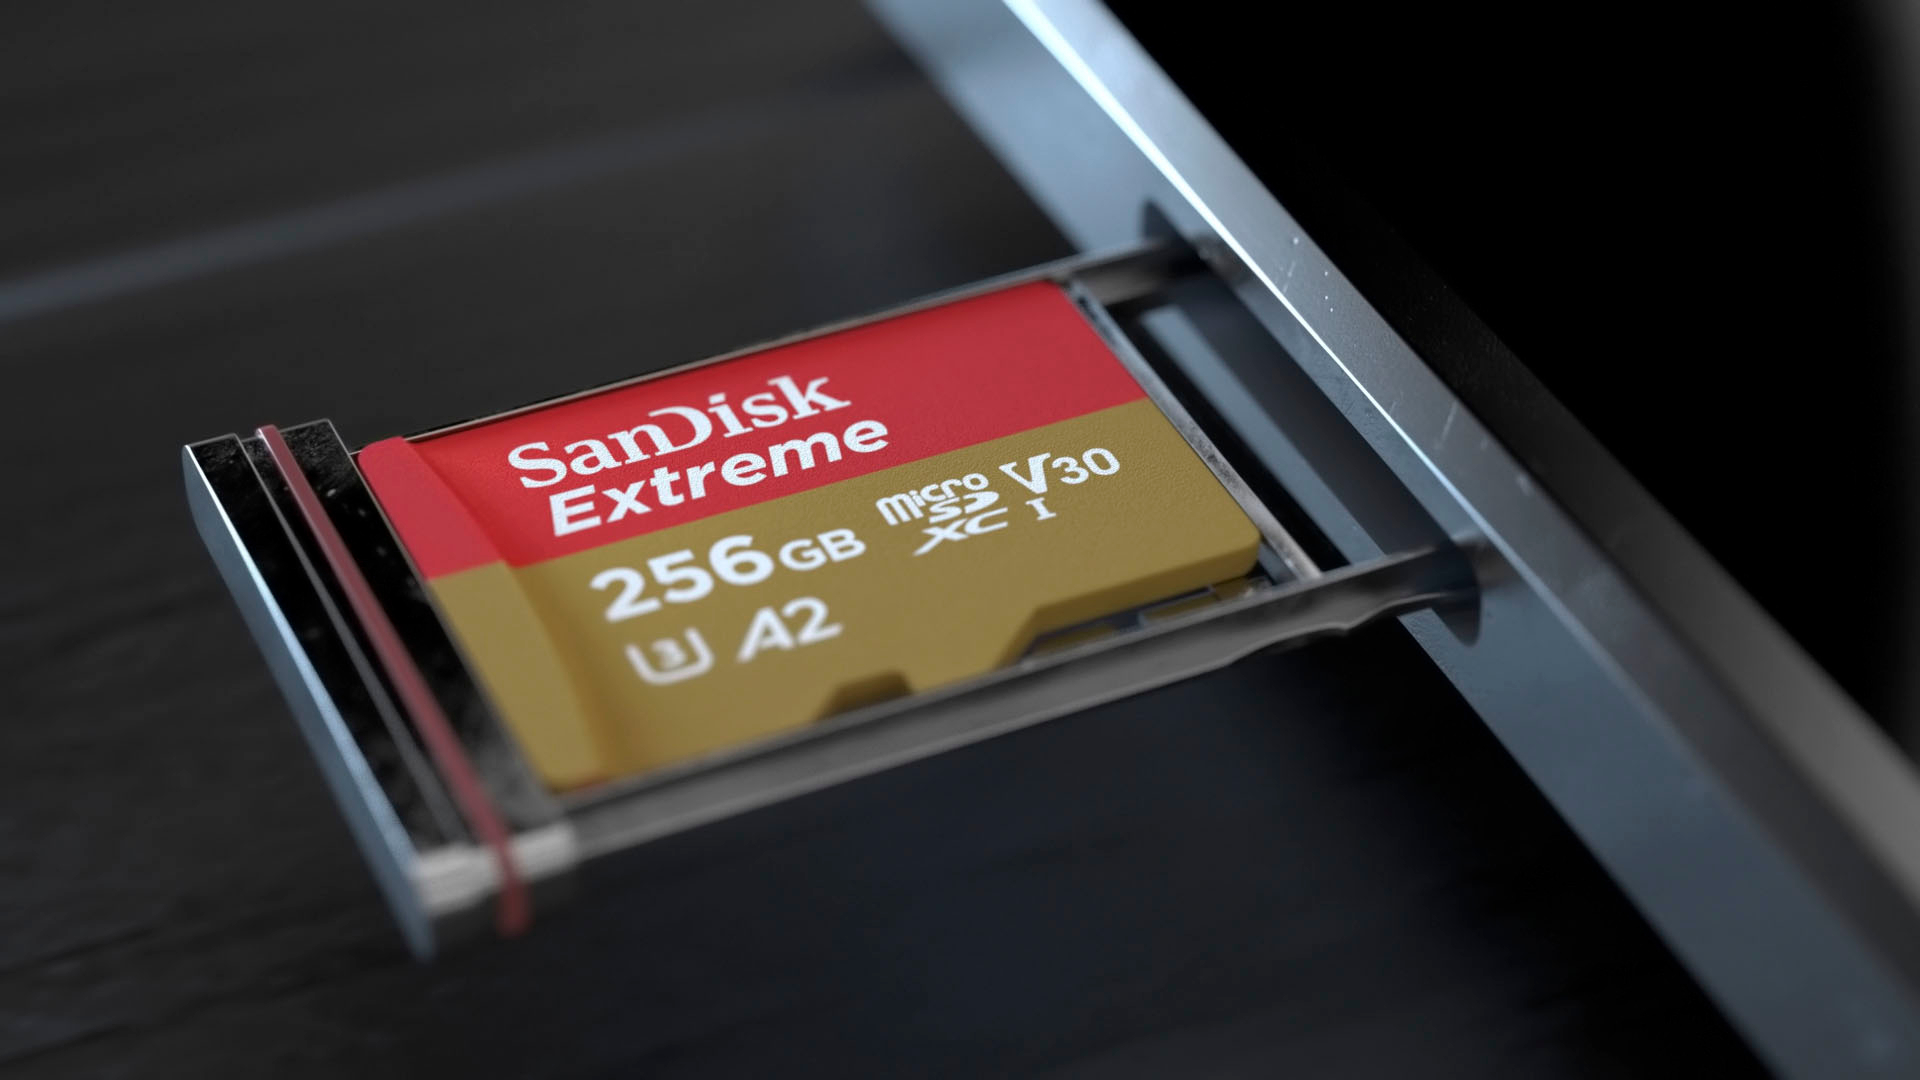 SanDisk 256GB Extreme SDSQXA1-256G-GN6MA microSDXC Memory Card C10 U3 V30  A2 UHS-I